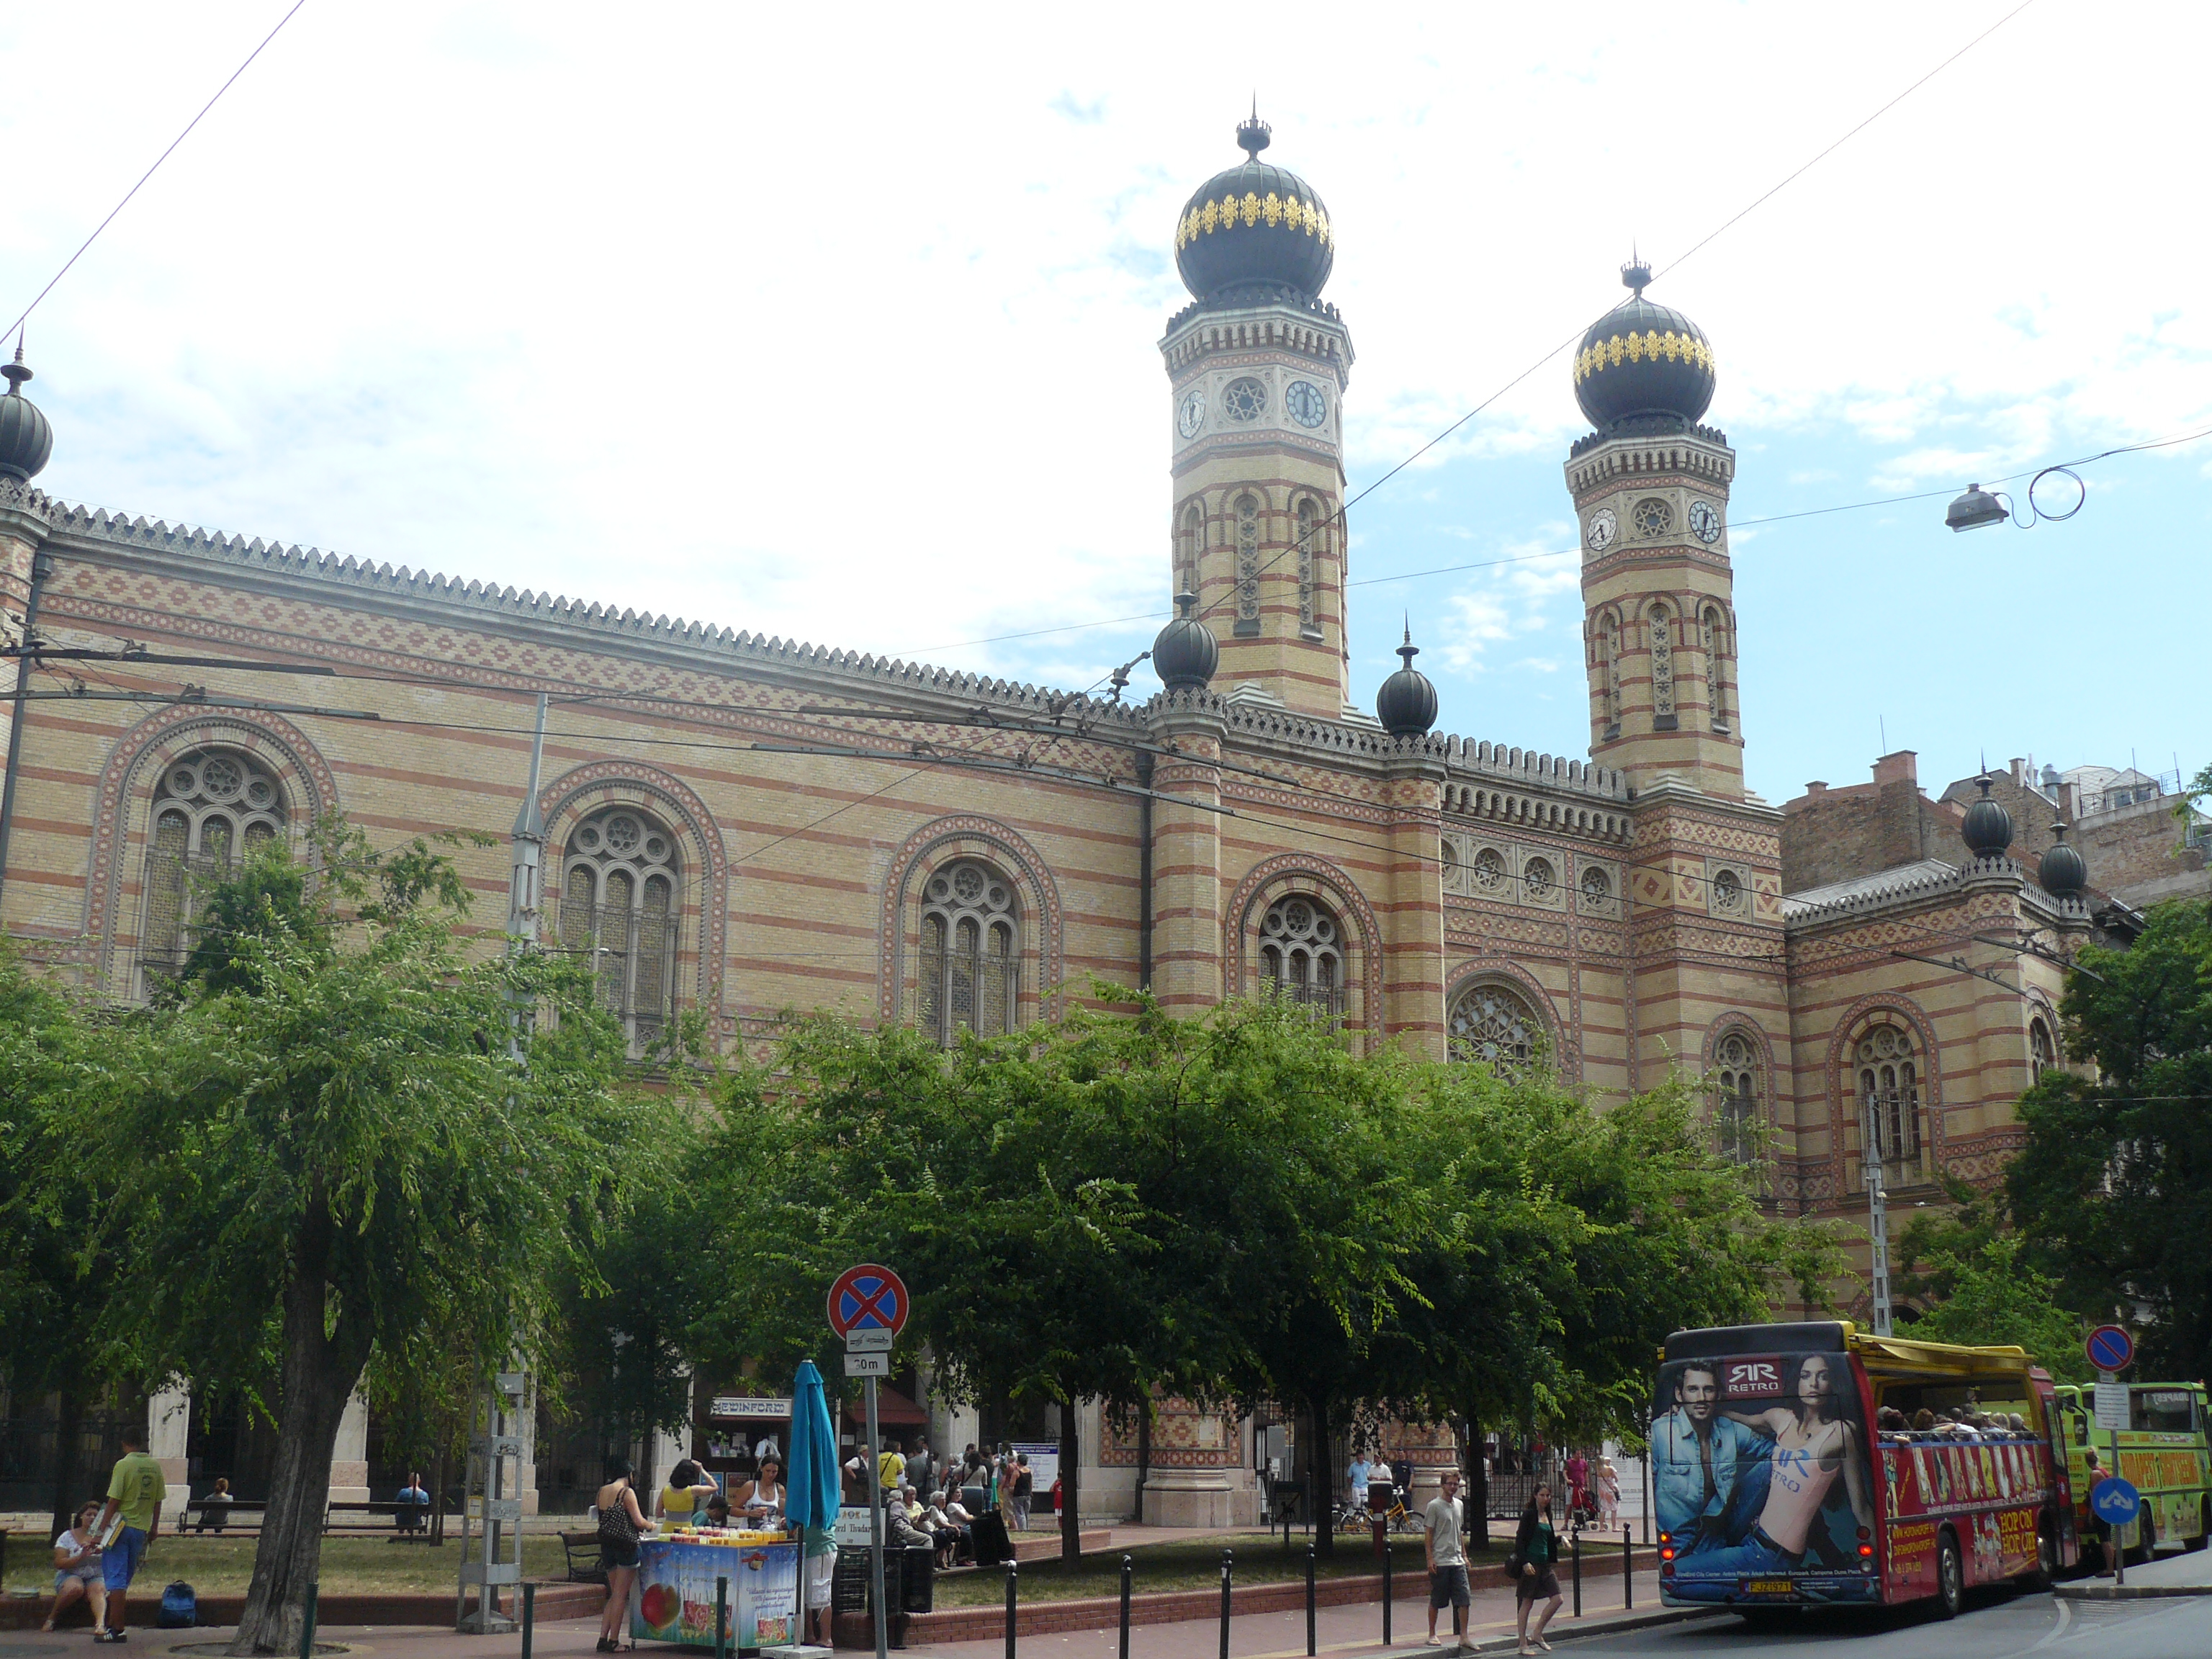 Sinagoga Judia Budapest